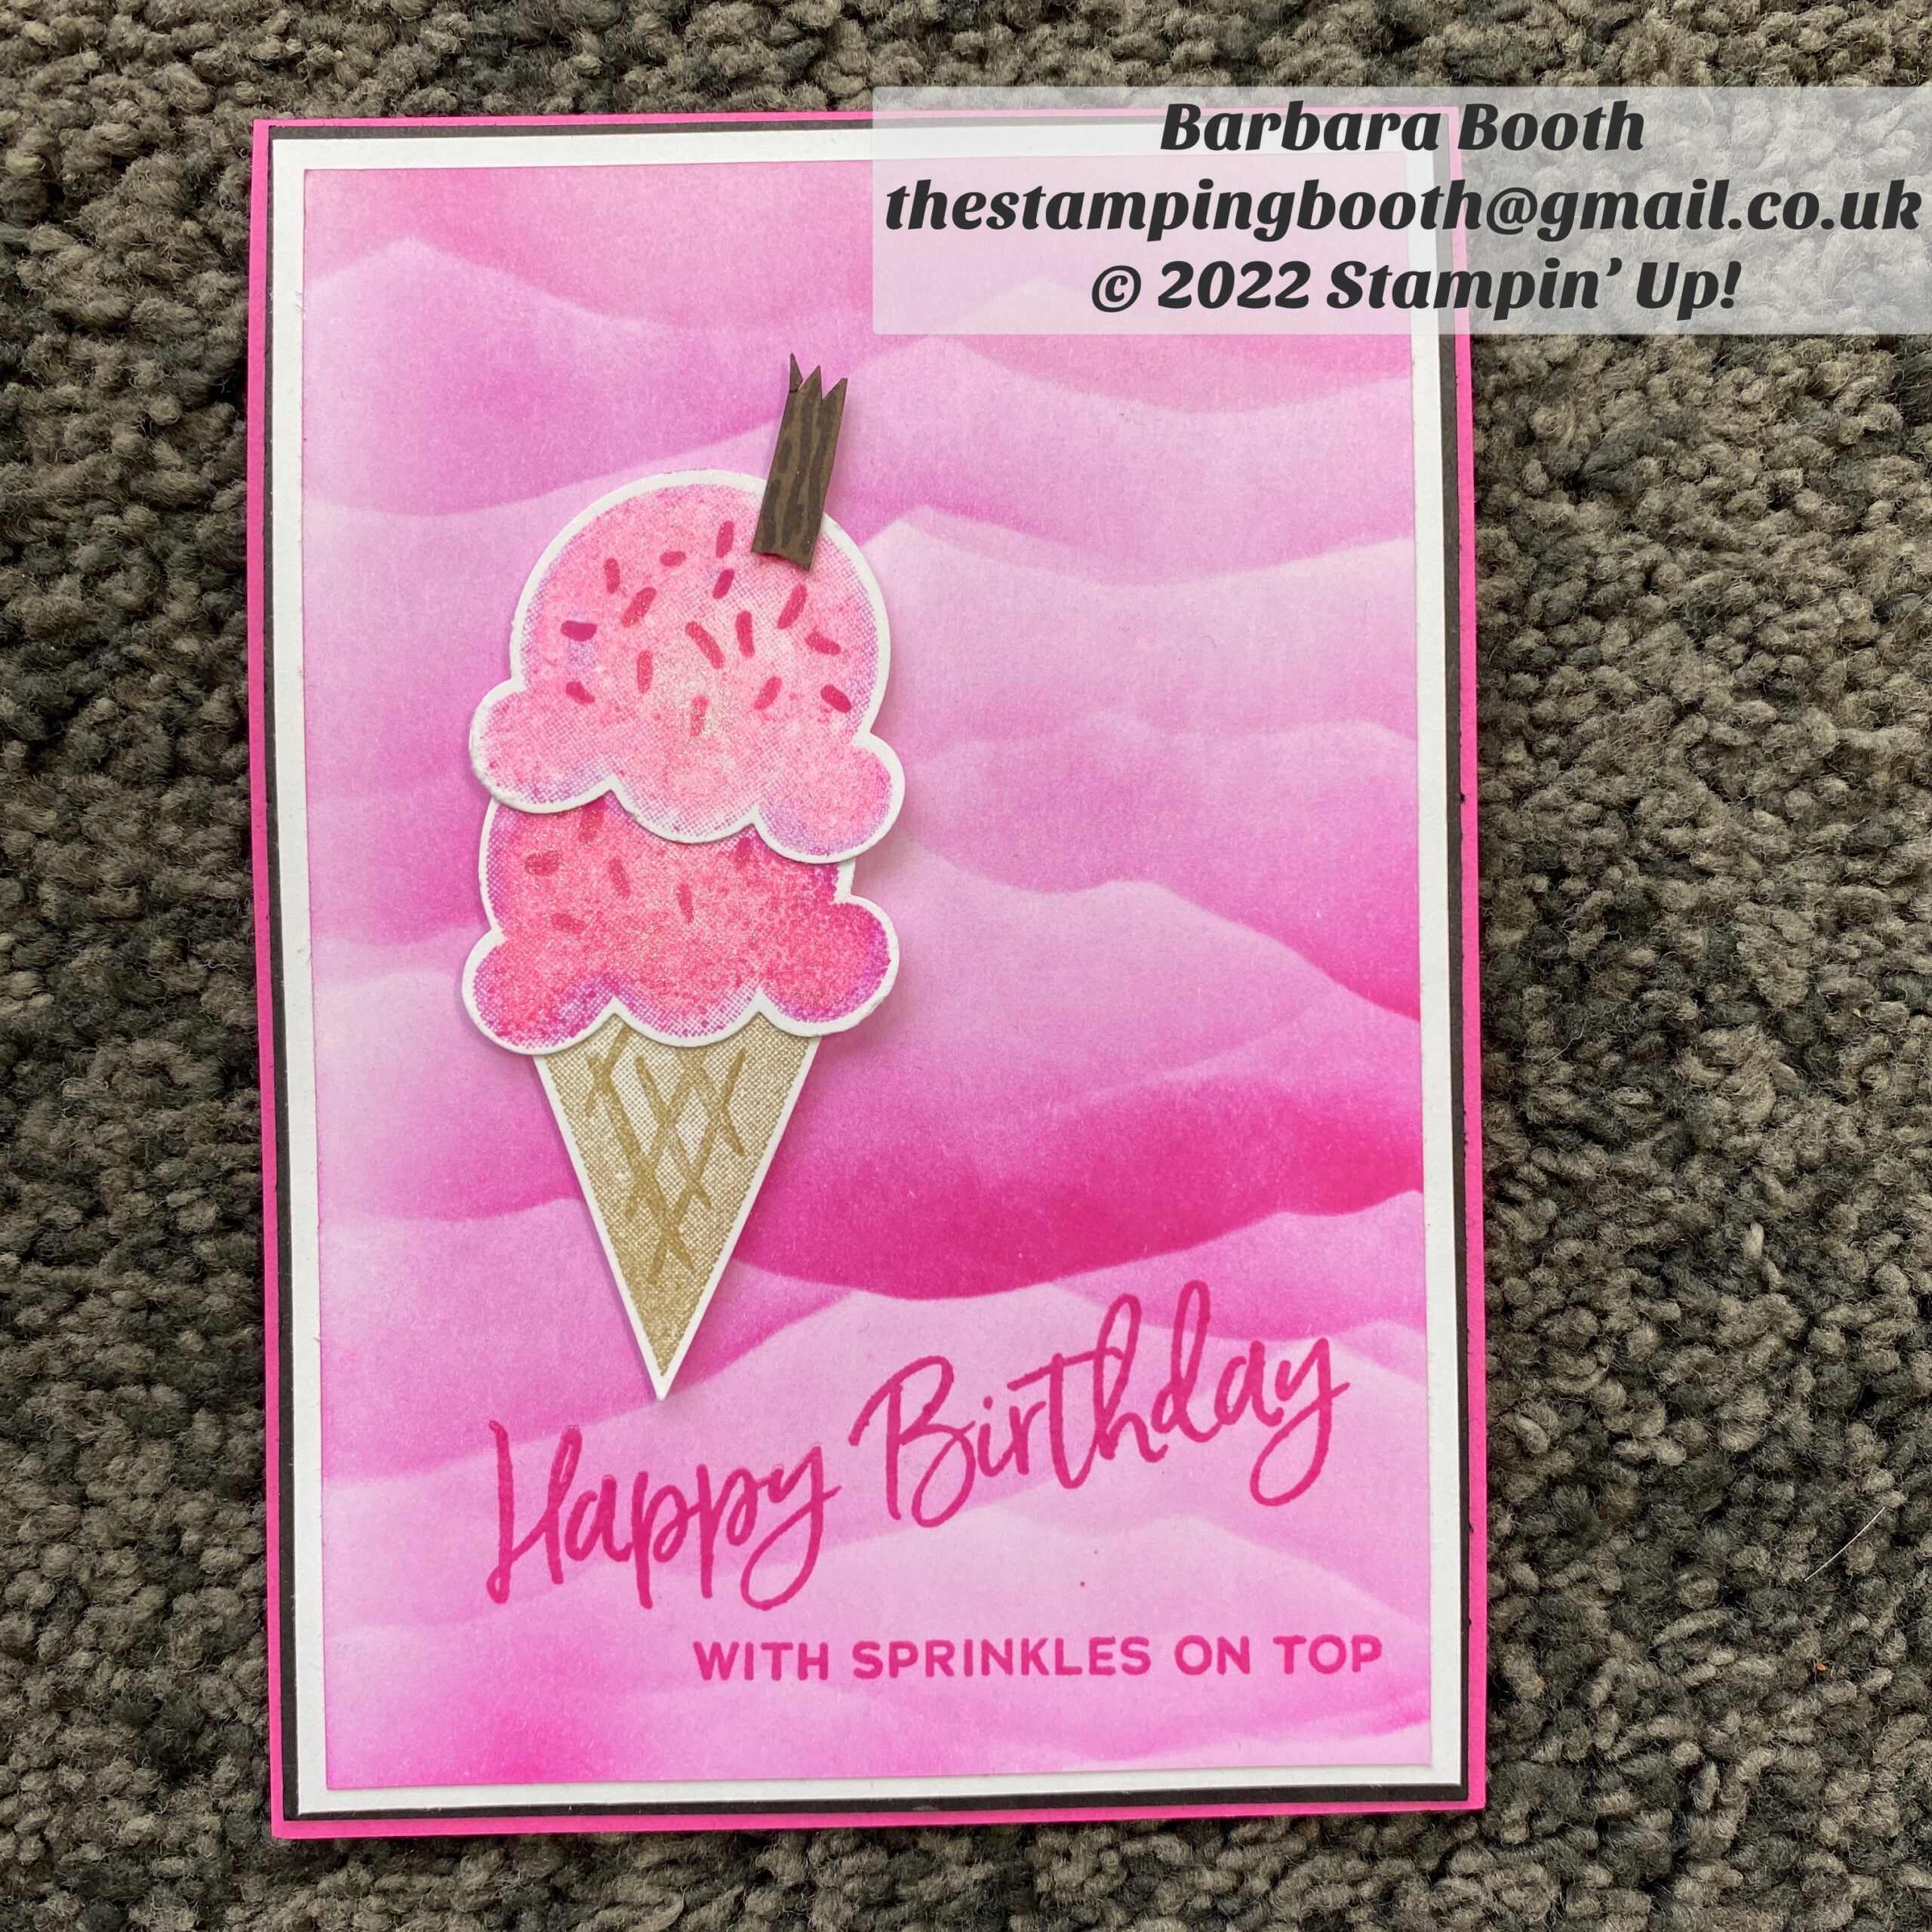 Sweet Ice Cream pretty on Pink card